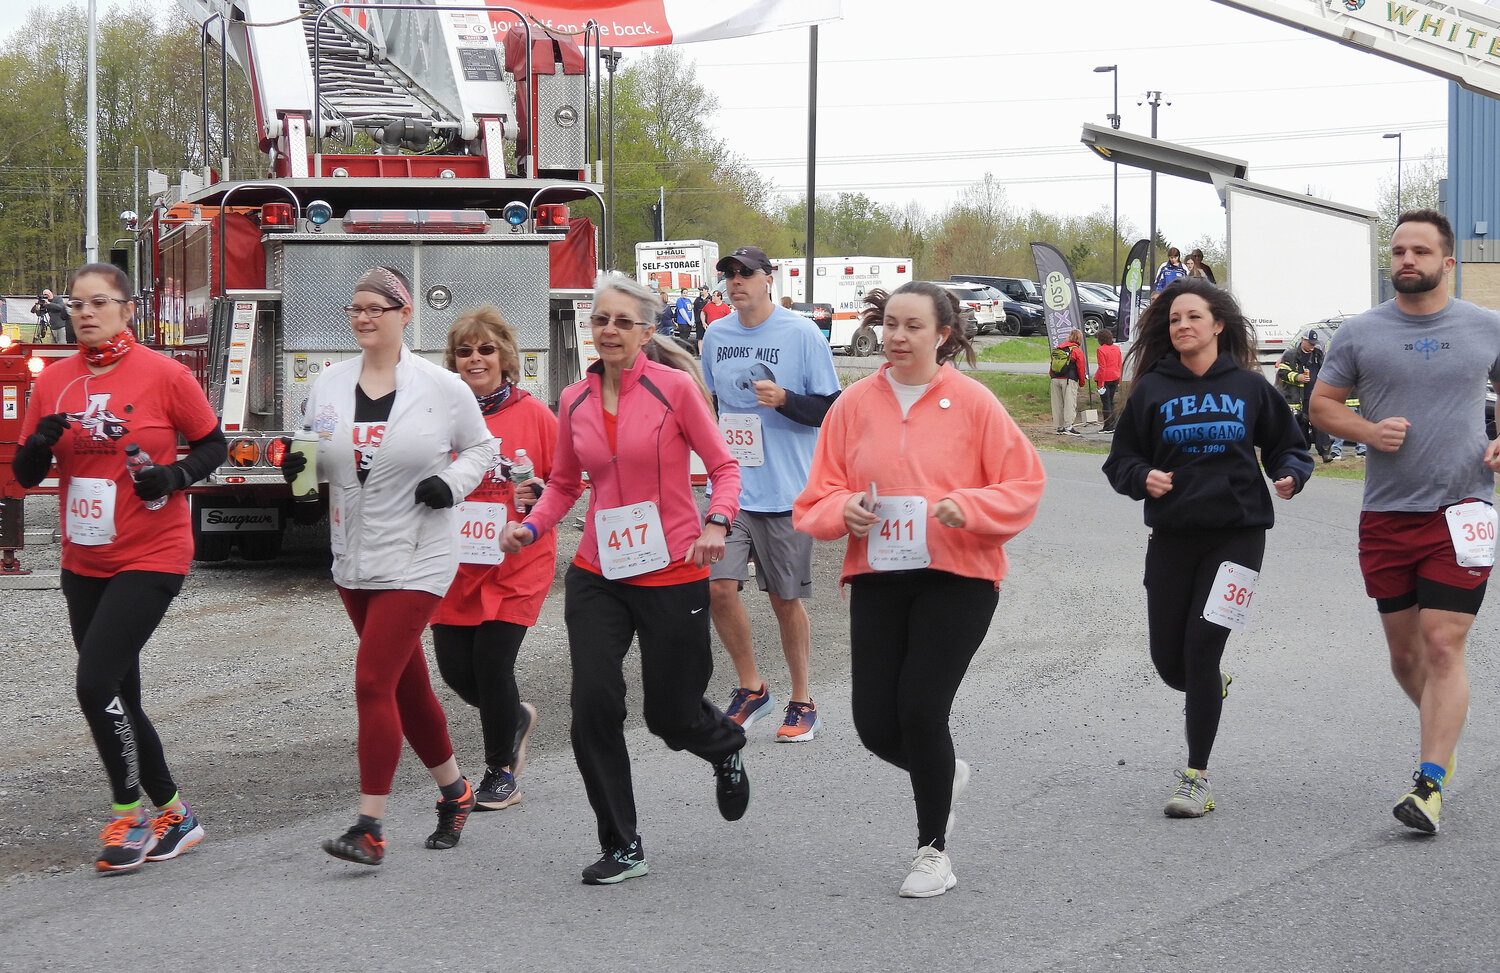 America’s Greatest Heart Run & Walk returns to promote healthier future